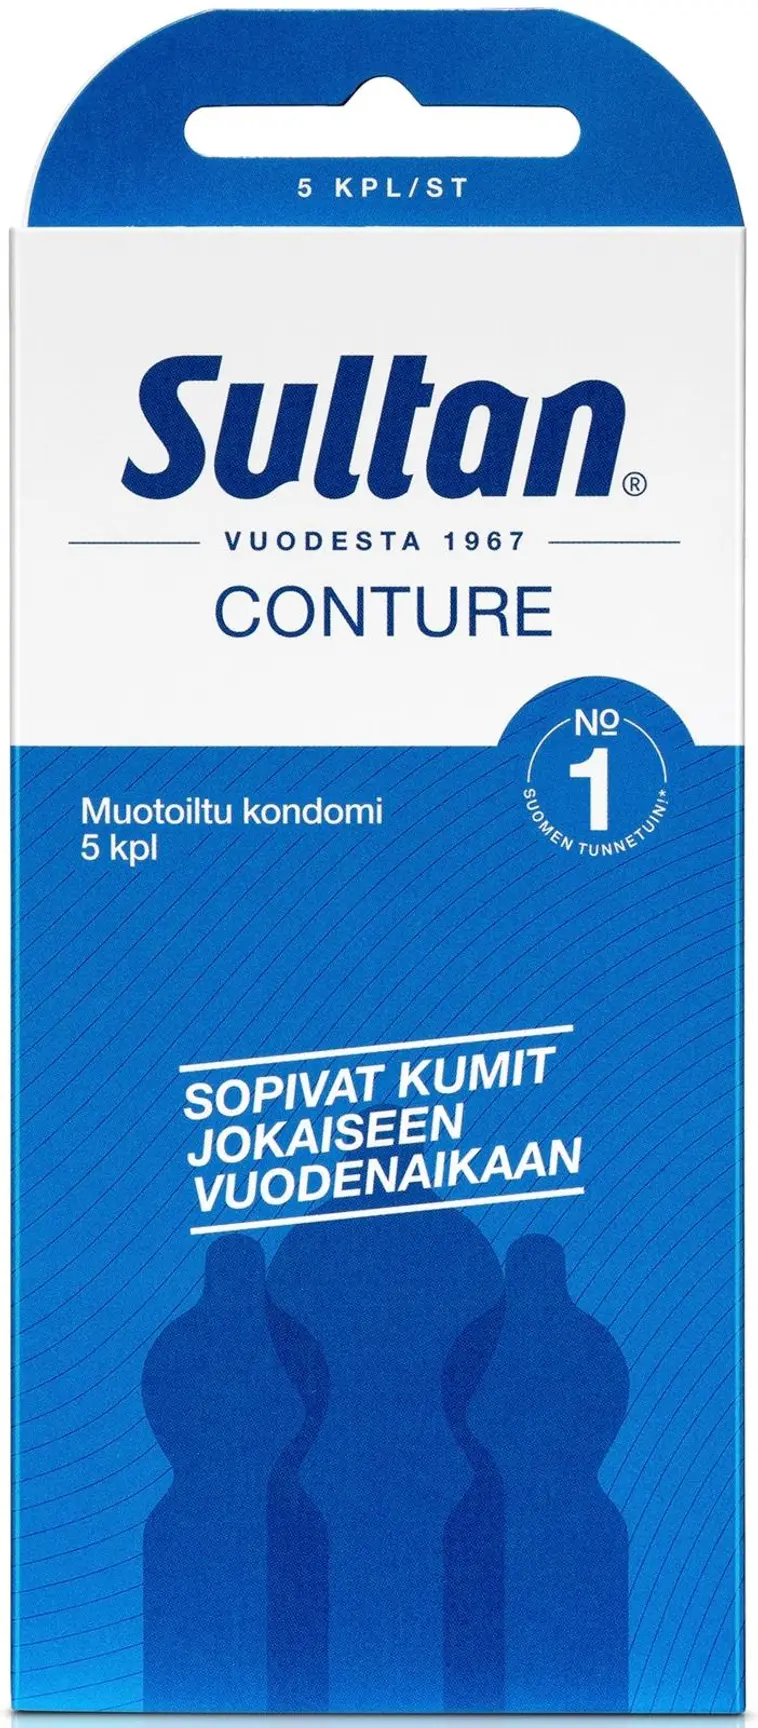 Sultan Conture muotoiltu kondomi 5kpl